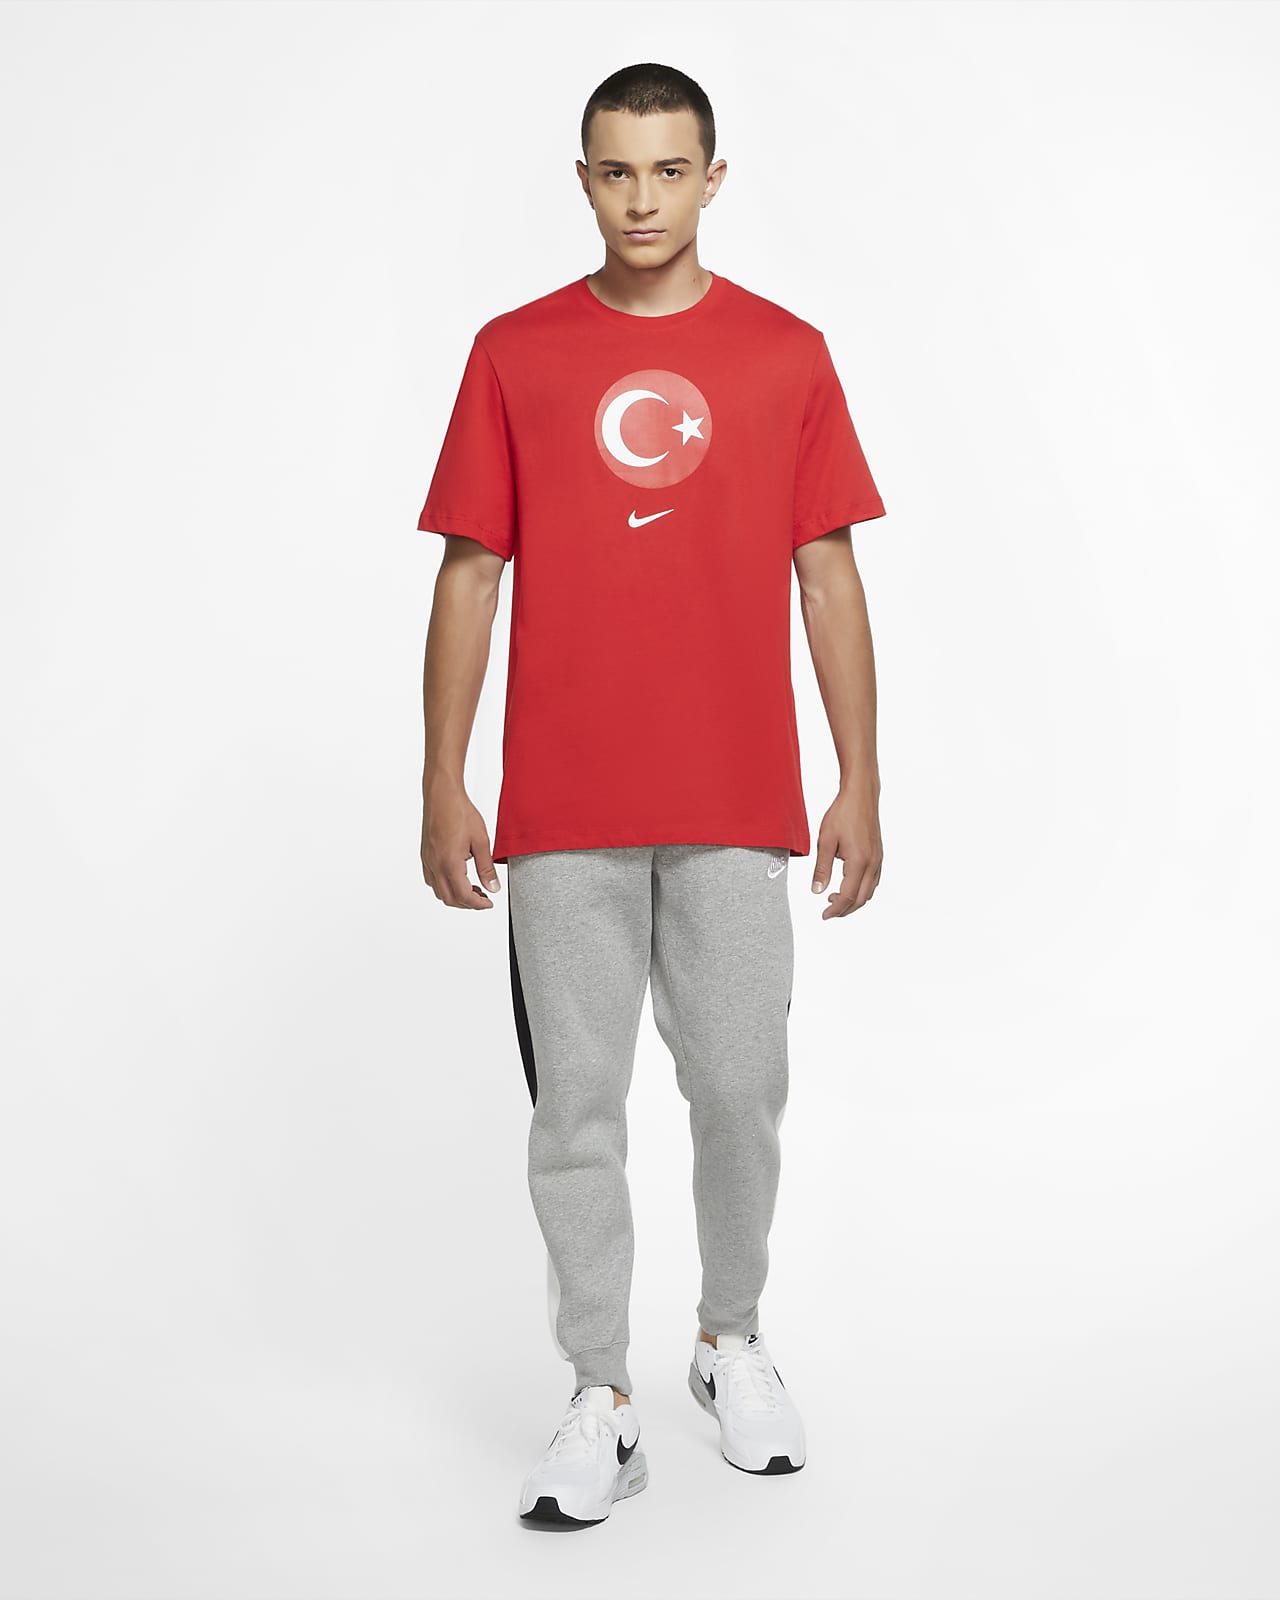 Nike Turkey. Найк из Турции. Nike из Турции. Магазин Nike в Турции. Найк турция сайт